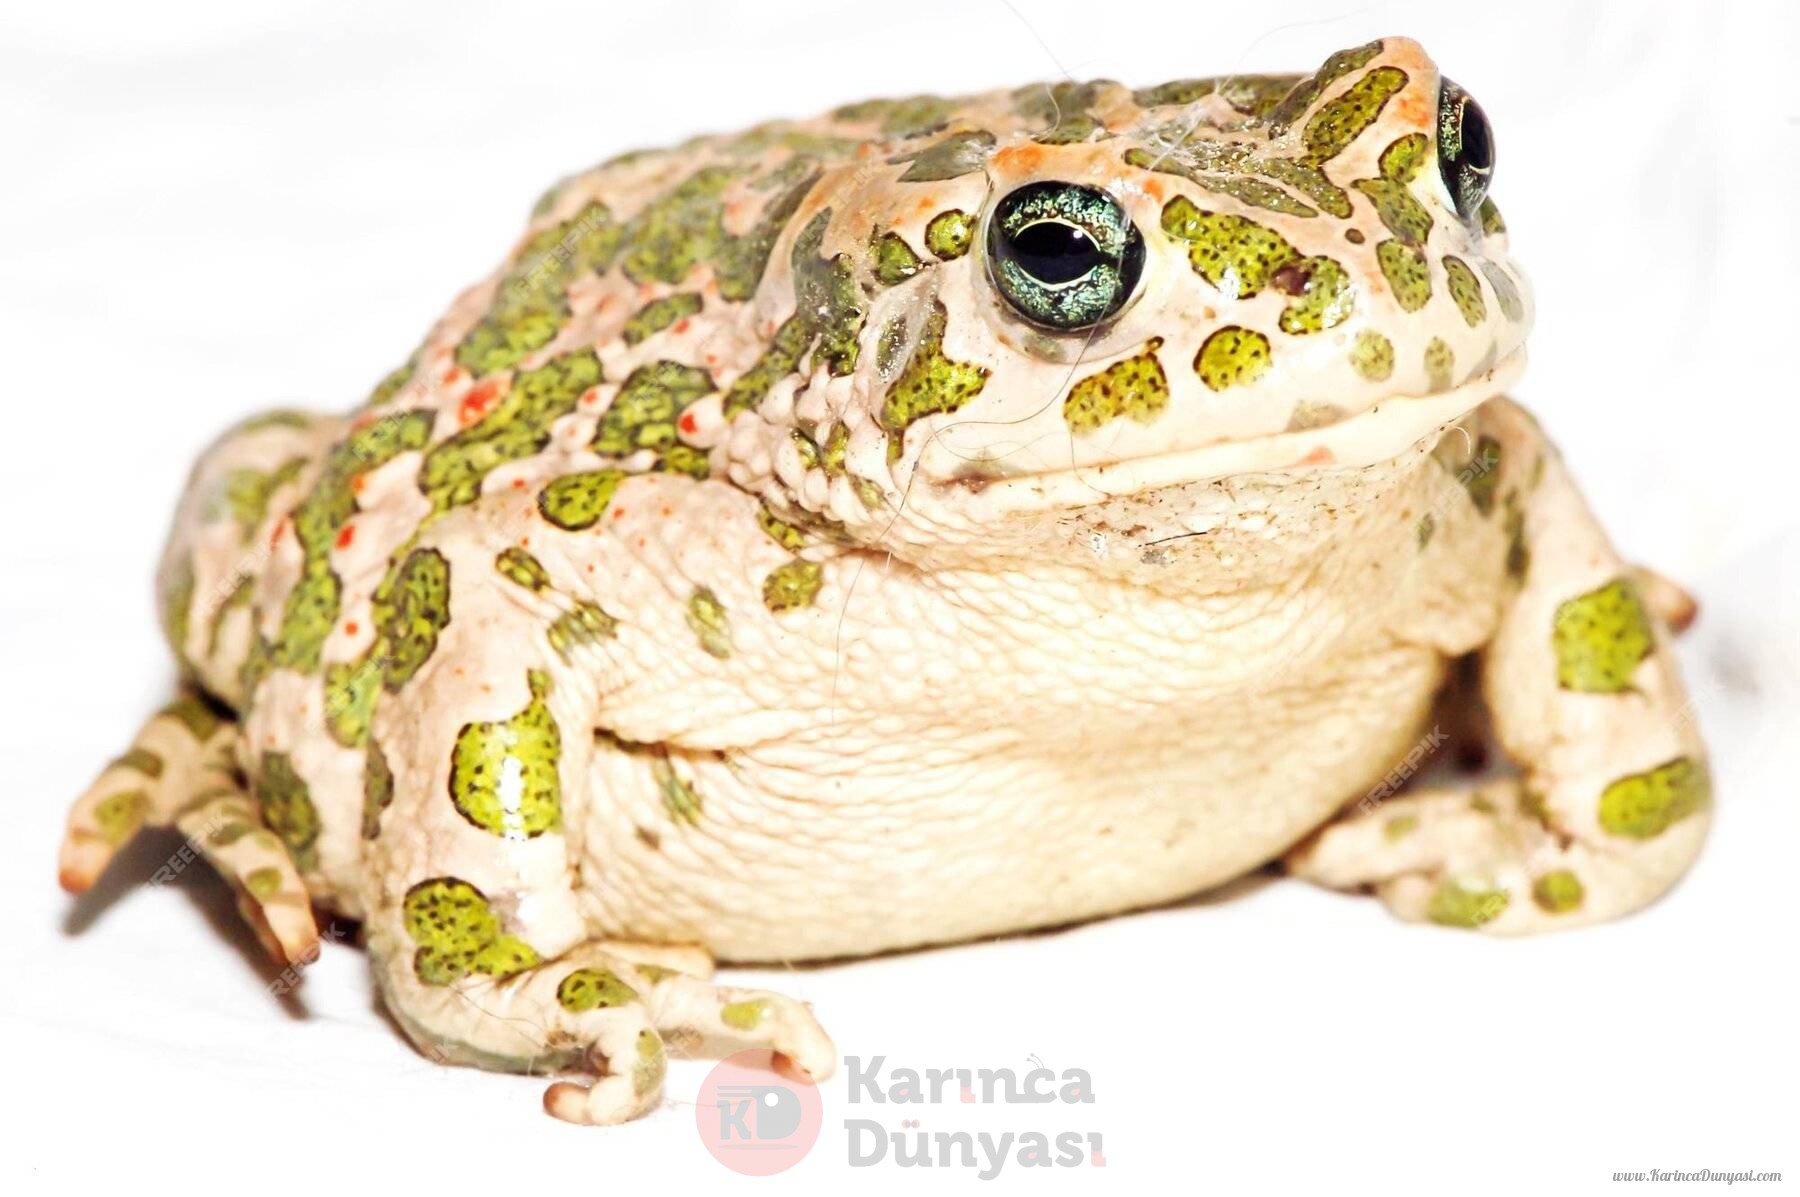 big-ugly-frog-common-european-toad-bufo_248415-562.jpg